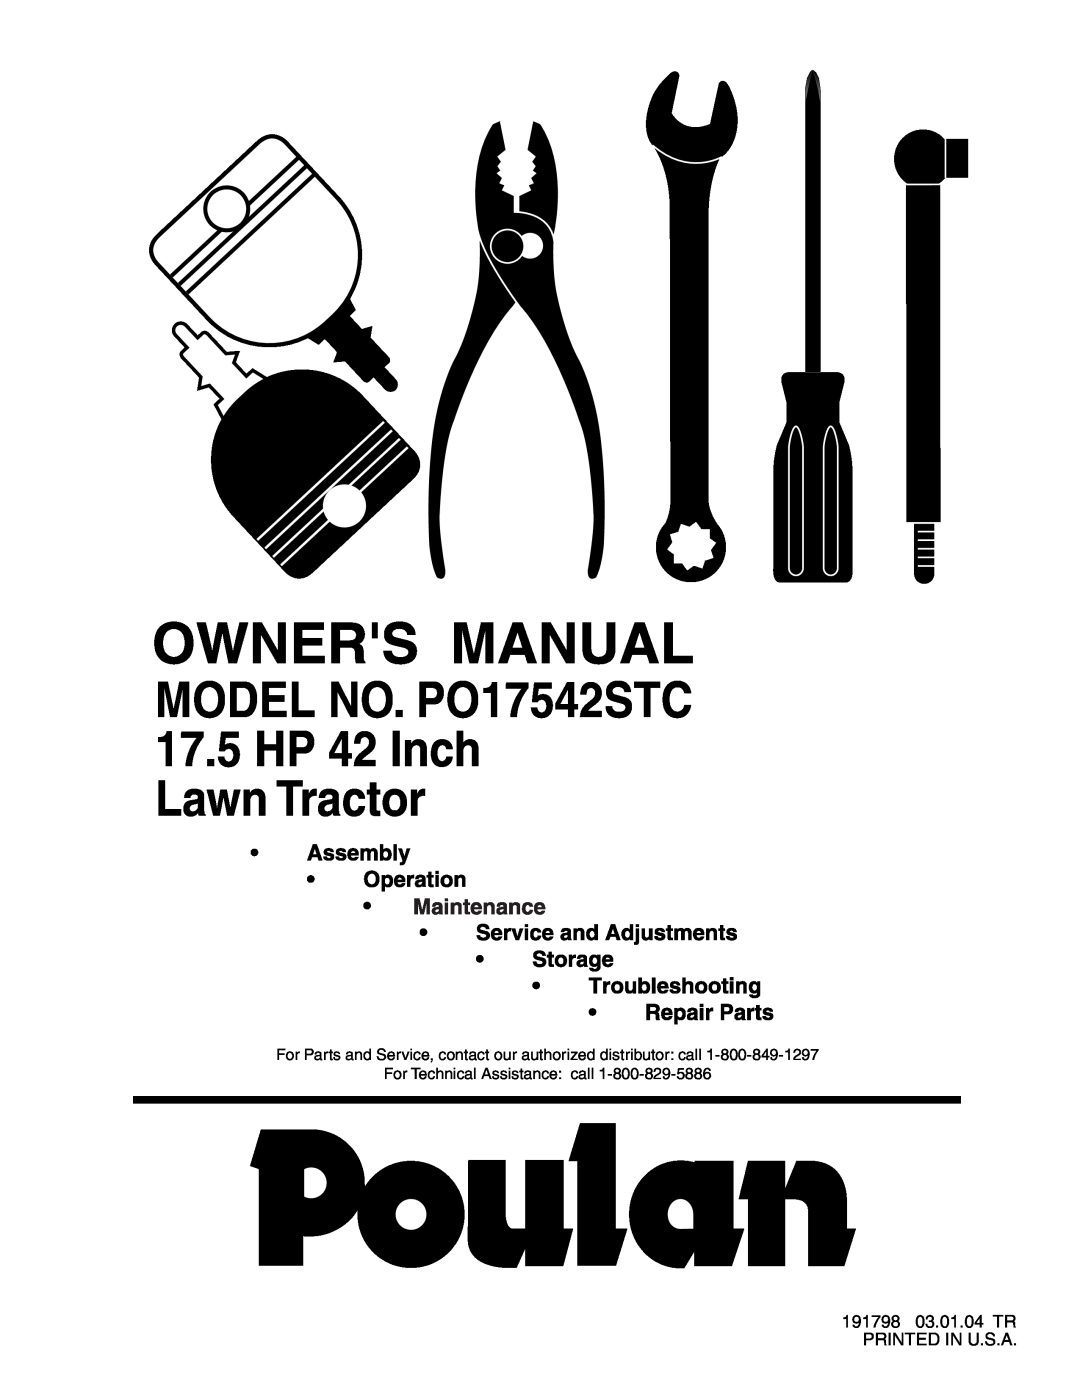 Poulan manual MODEL NO. PO17542STC 17.5HP 42 Inch Lawn Tractor 